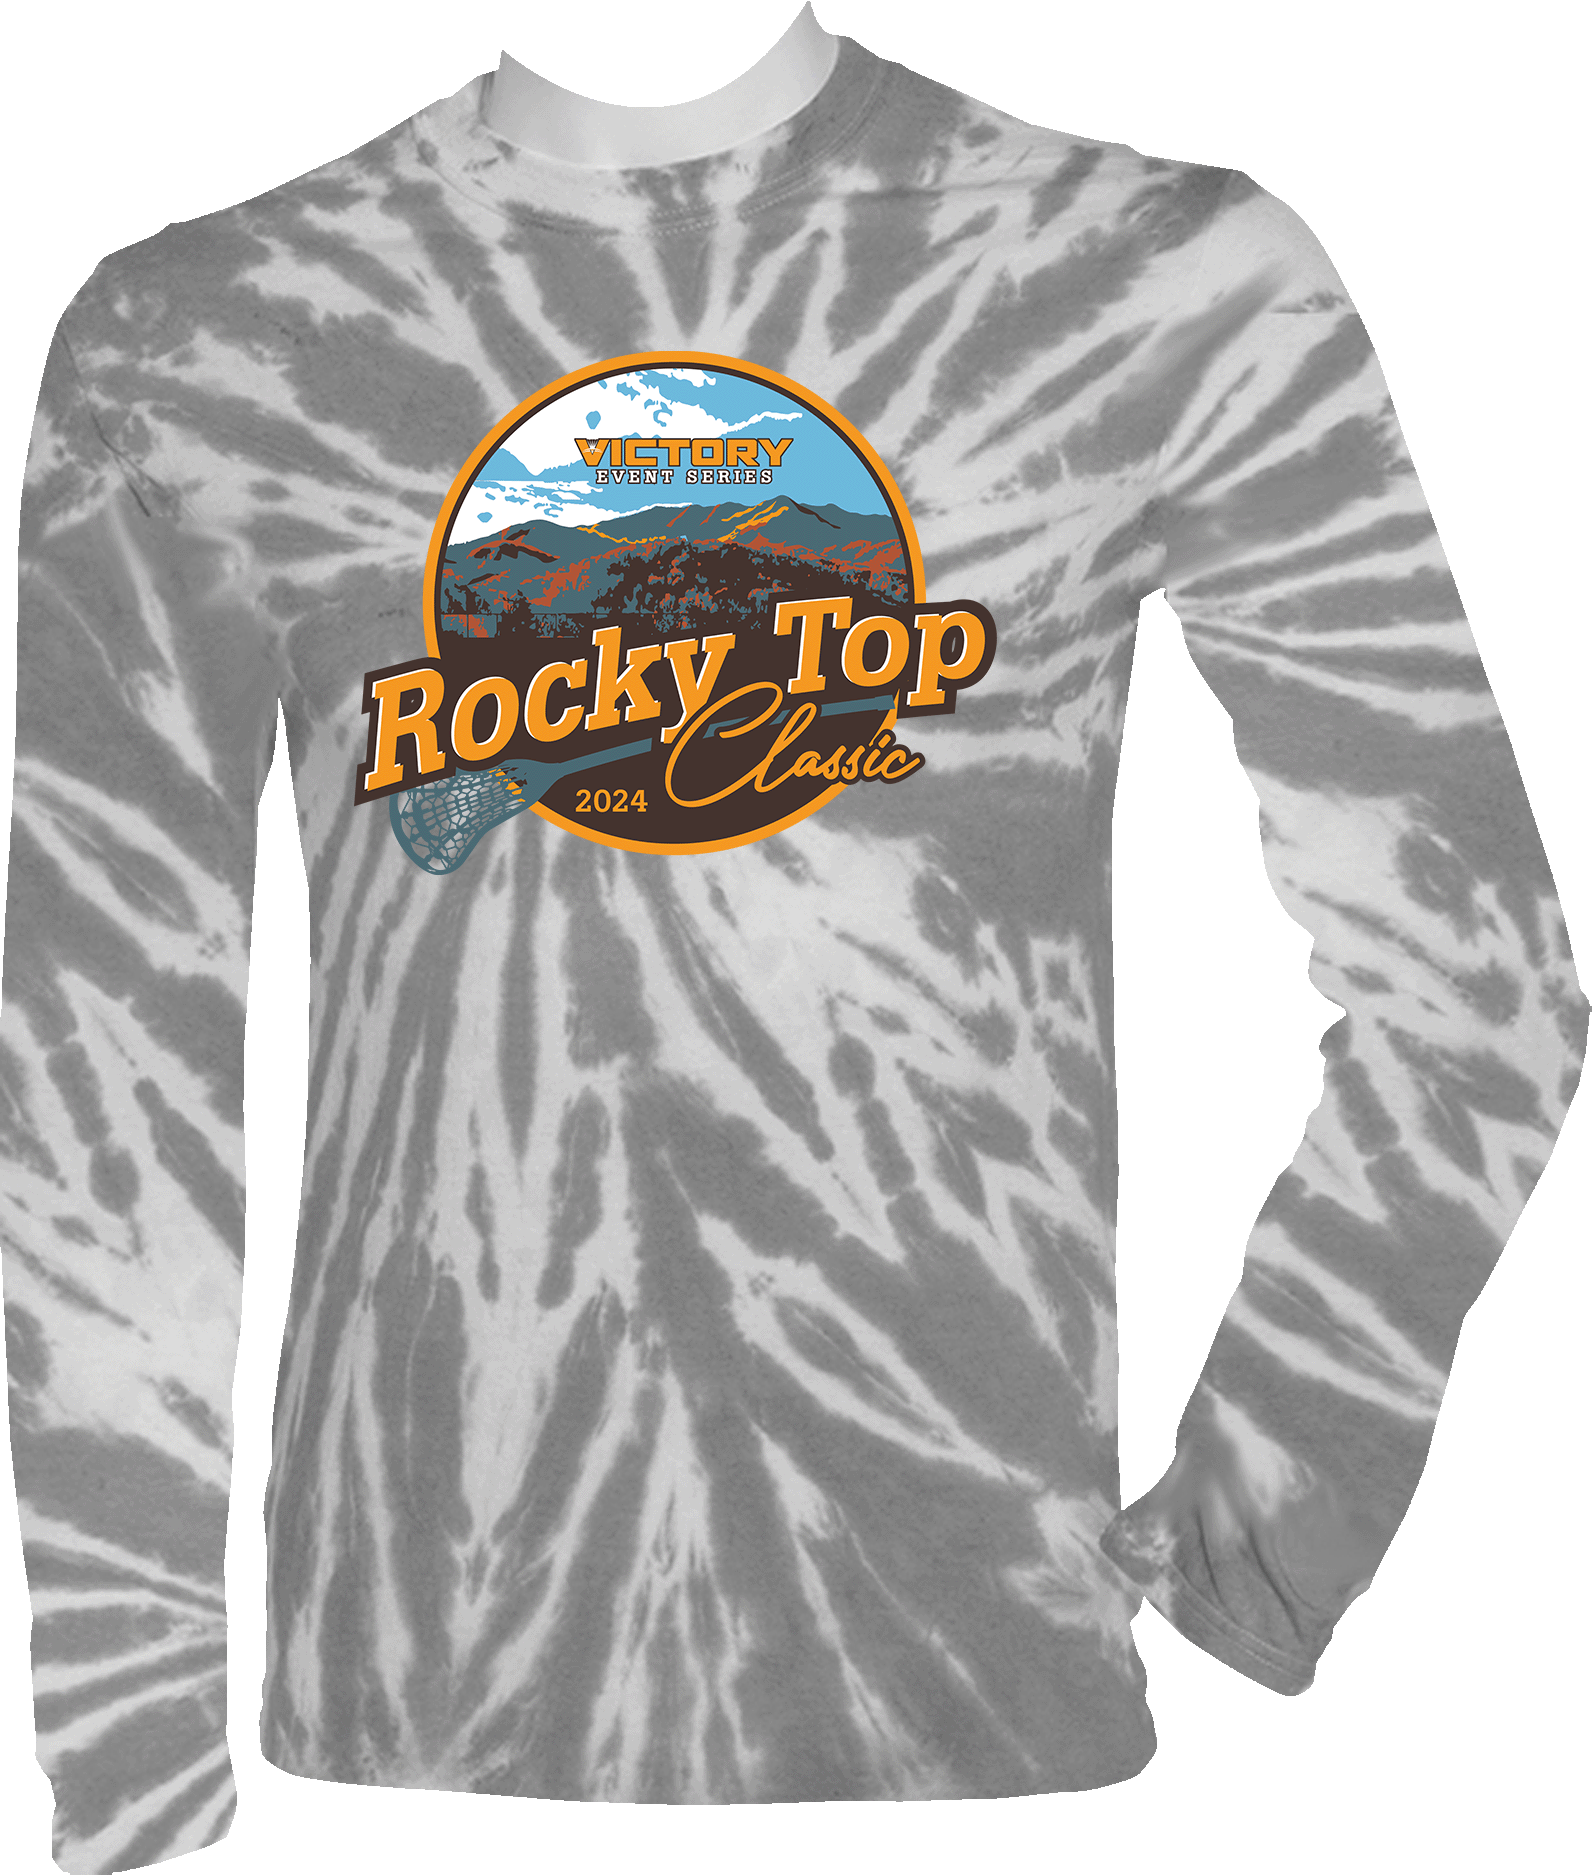 Tie-Dye Long Sleeves - 2024 Rocky Top Classic